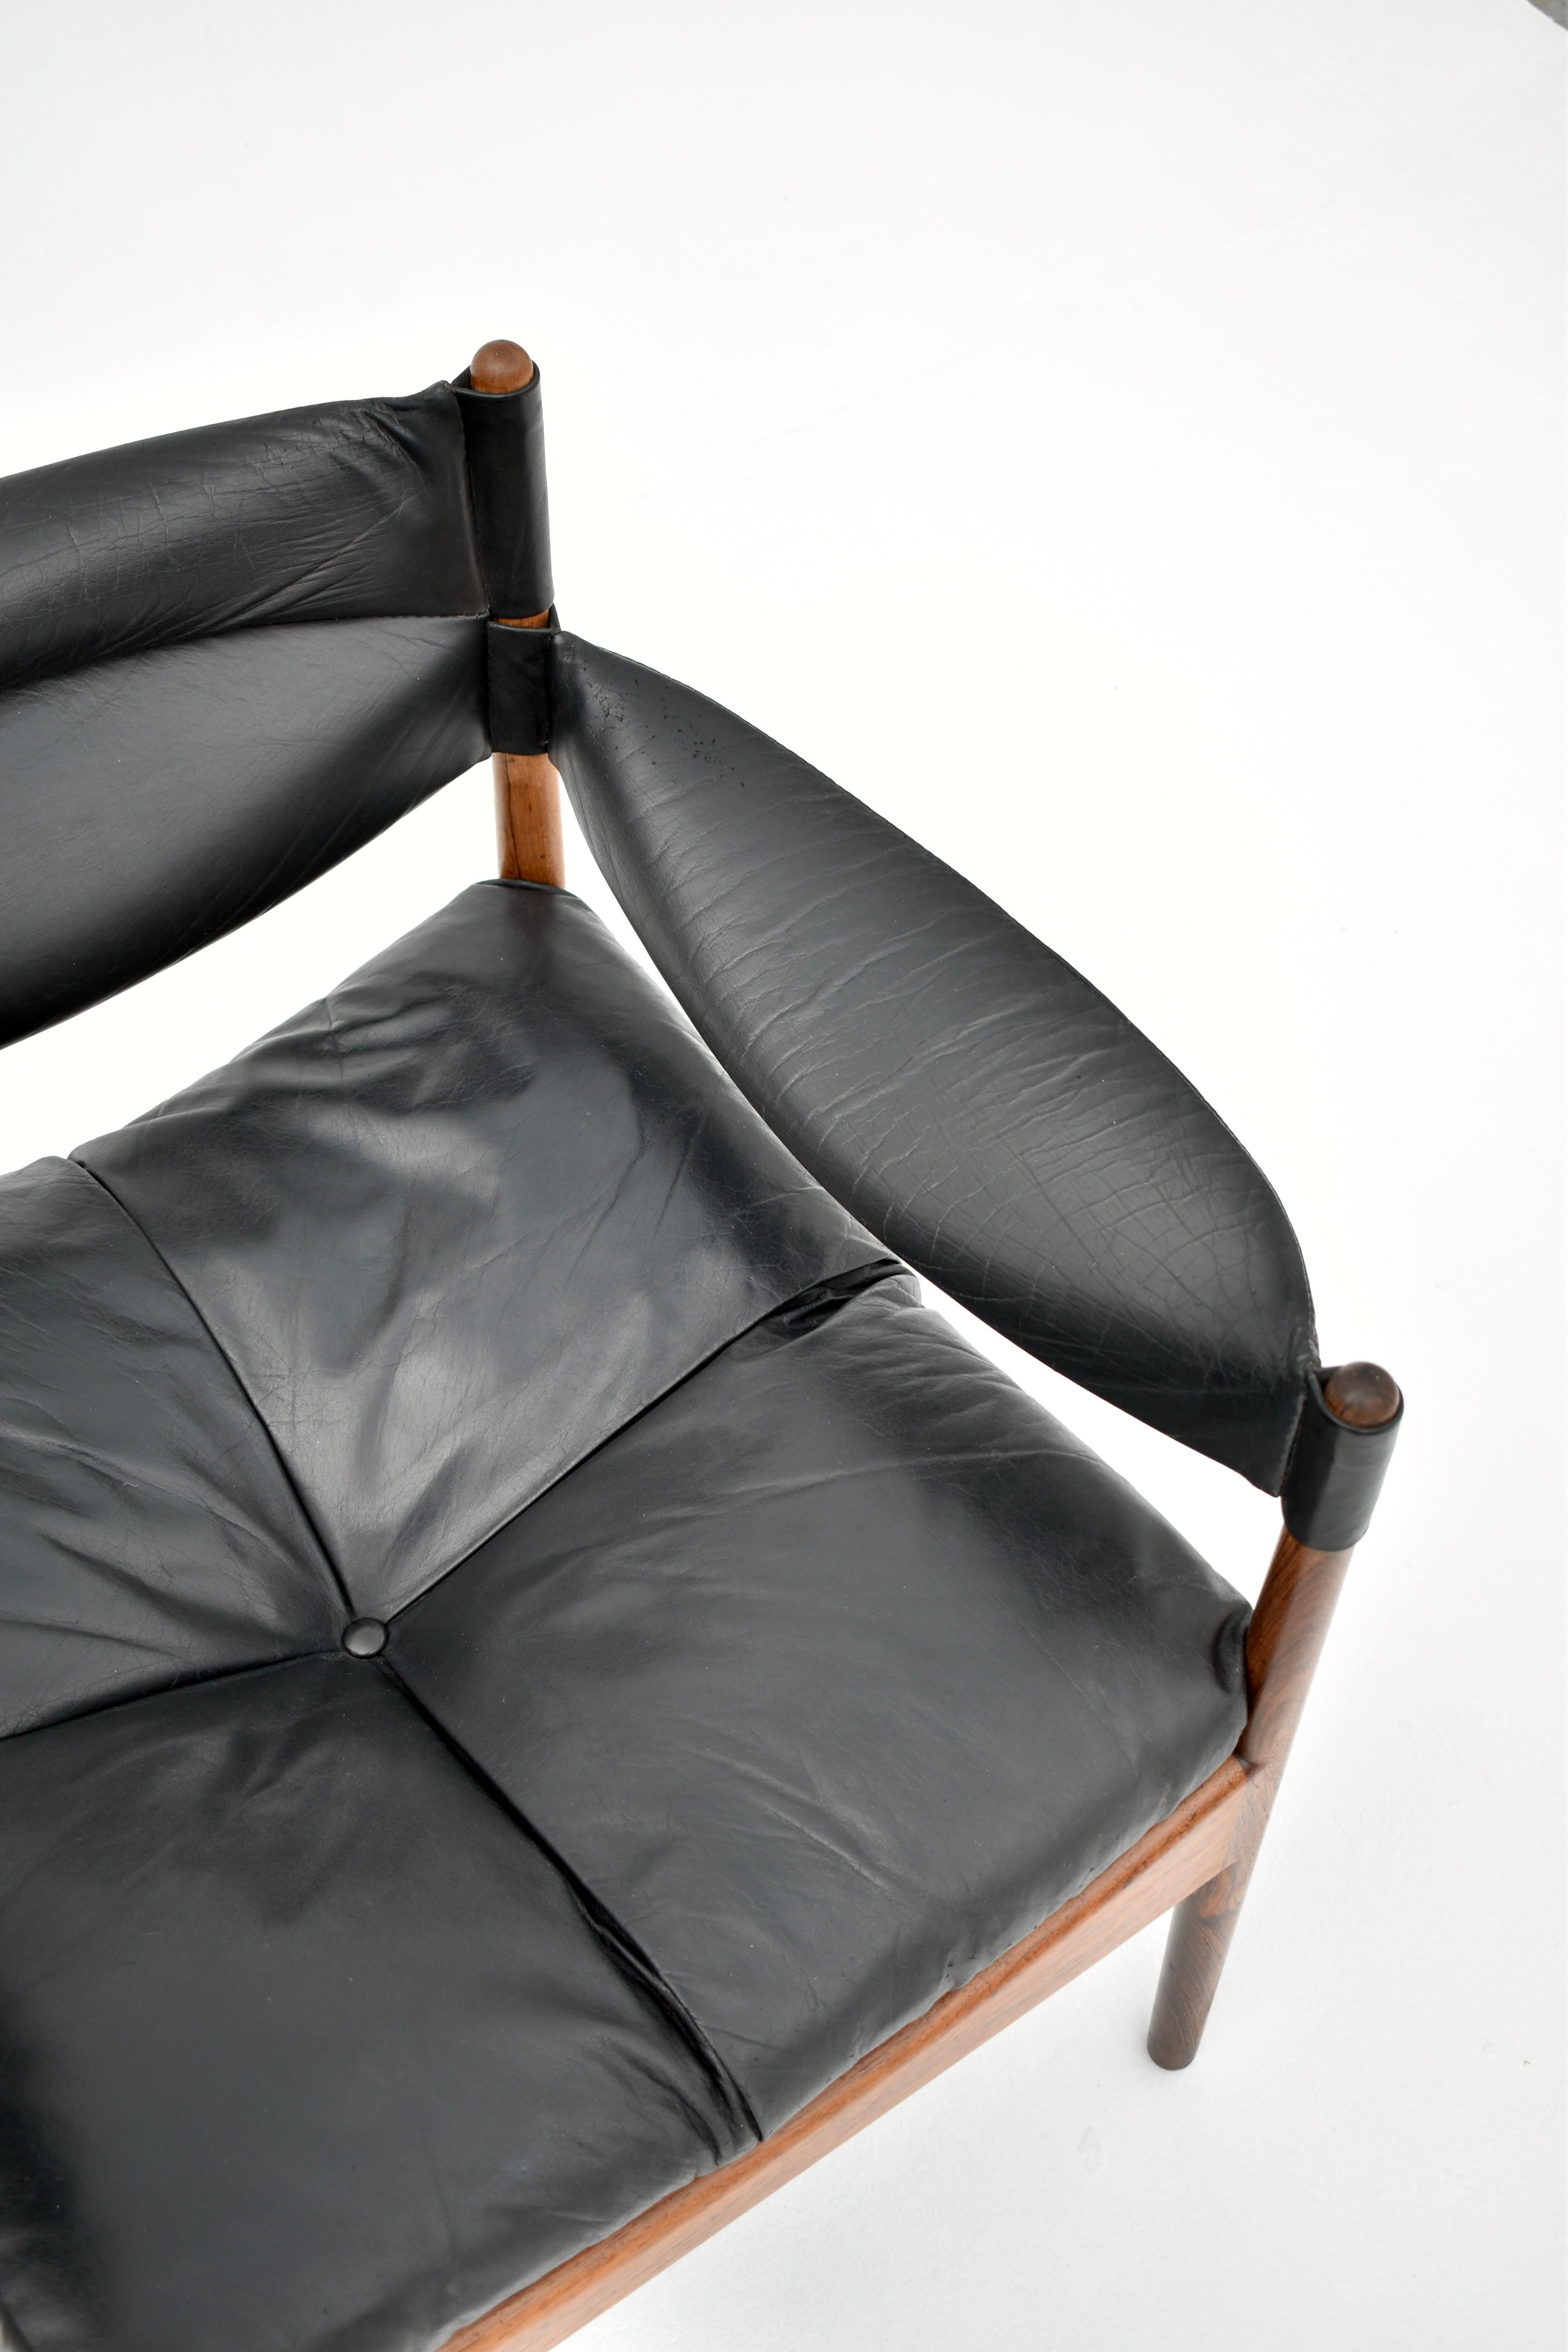 Leather Kristian Vedel Modus Lounge Chair & Footstool For Søren Willadsen møbelfabrik